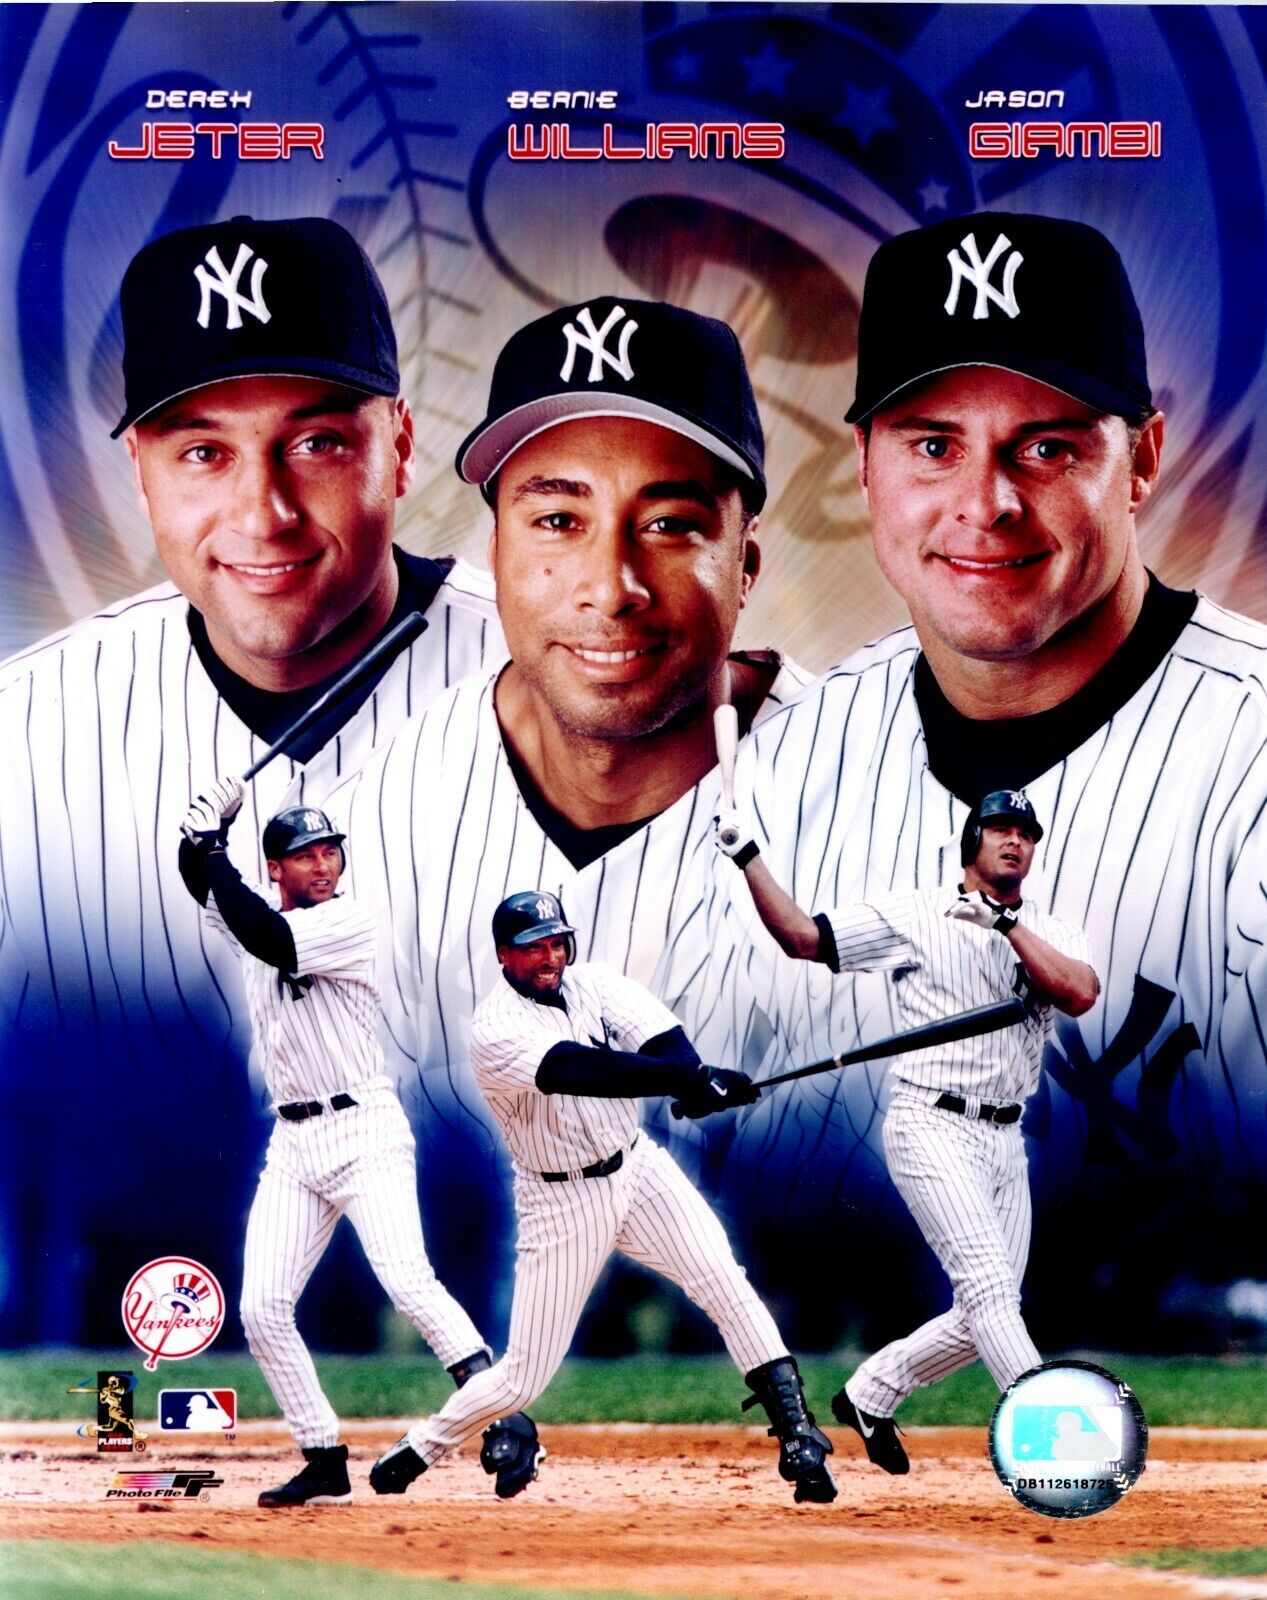 Derek Jeter, Beanie Williams, Jason Giambi New York Yankees 8x10 Color Photo